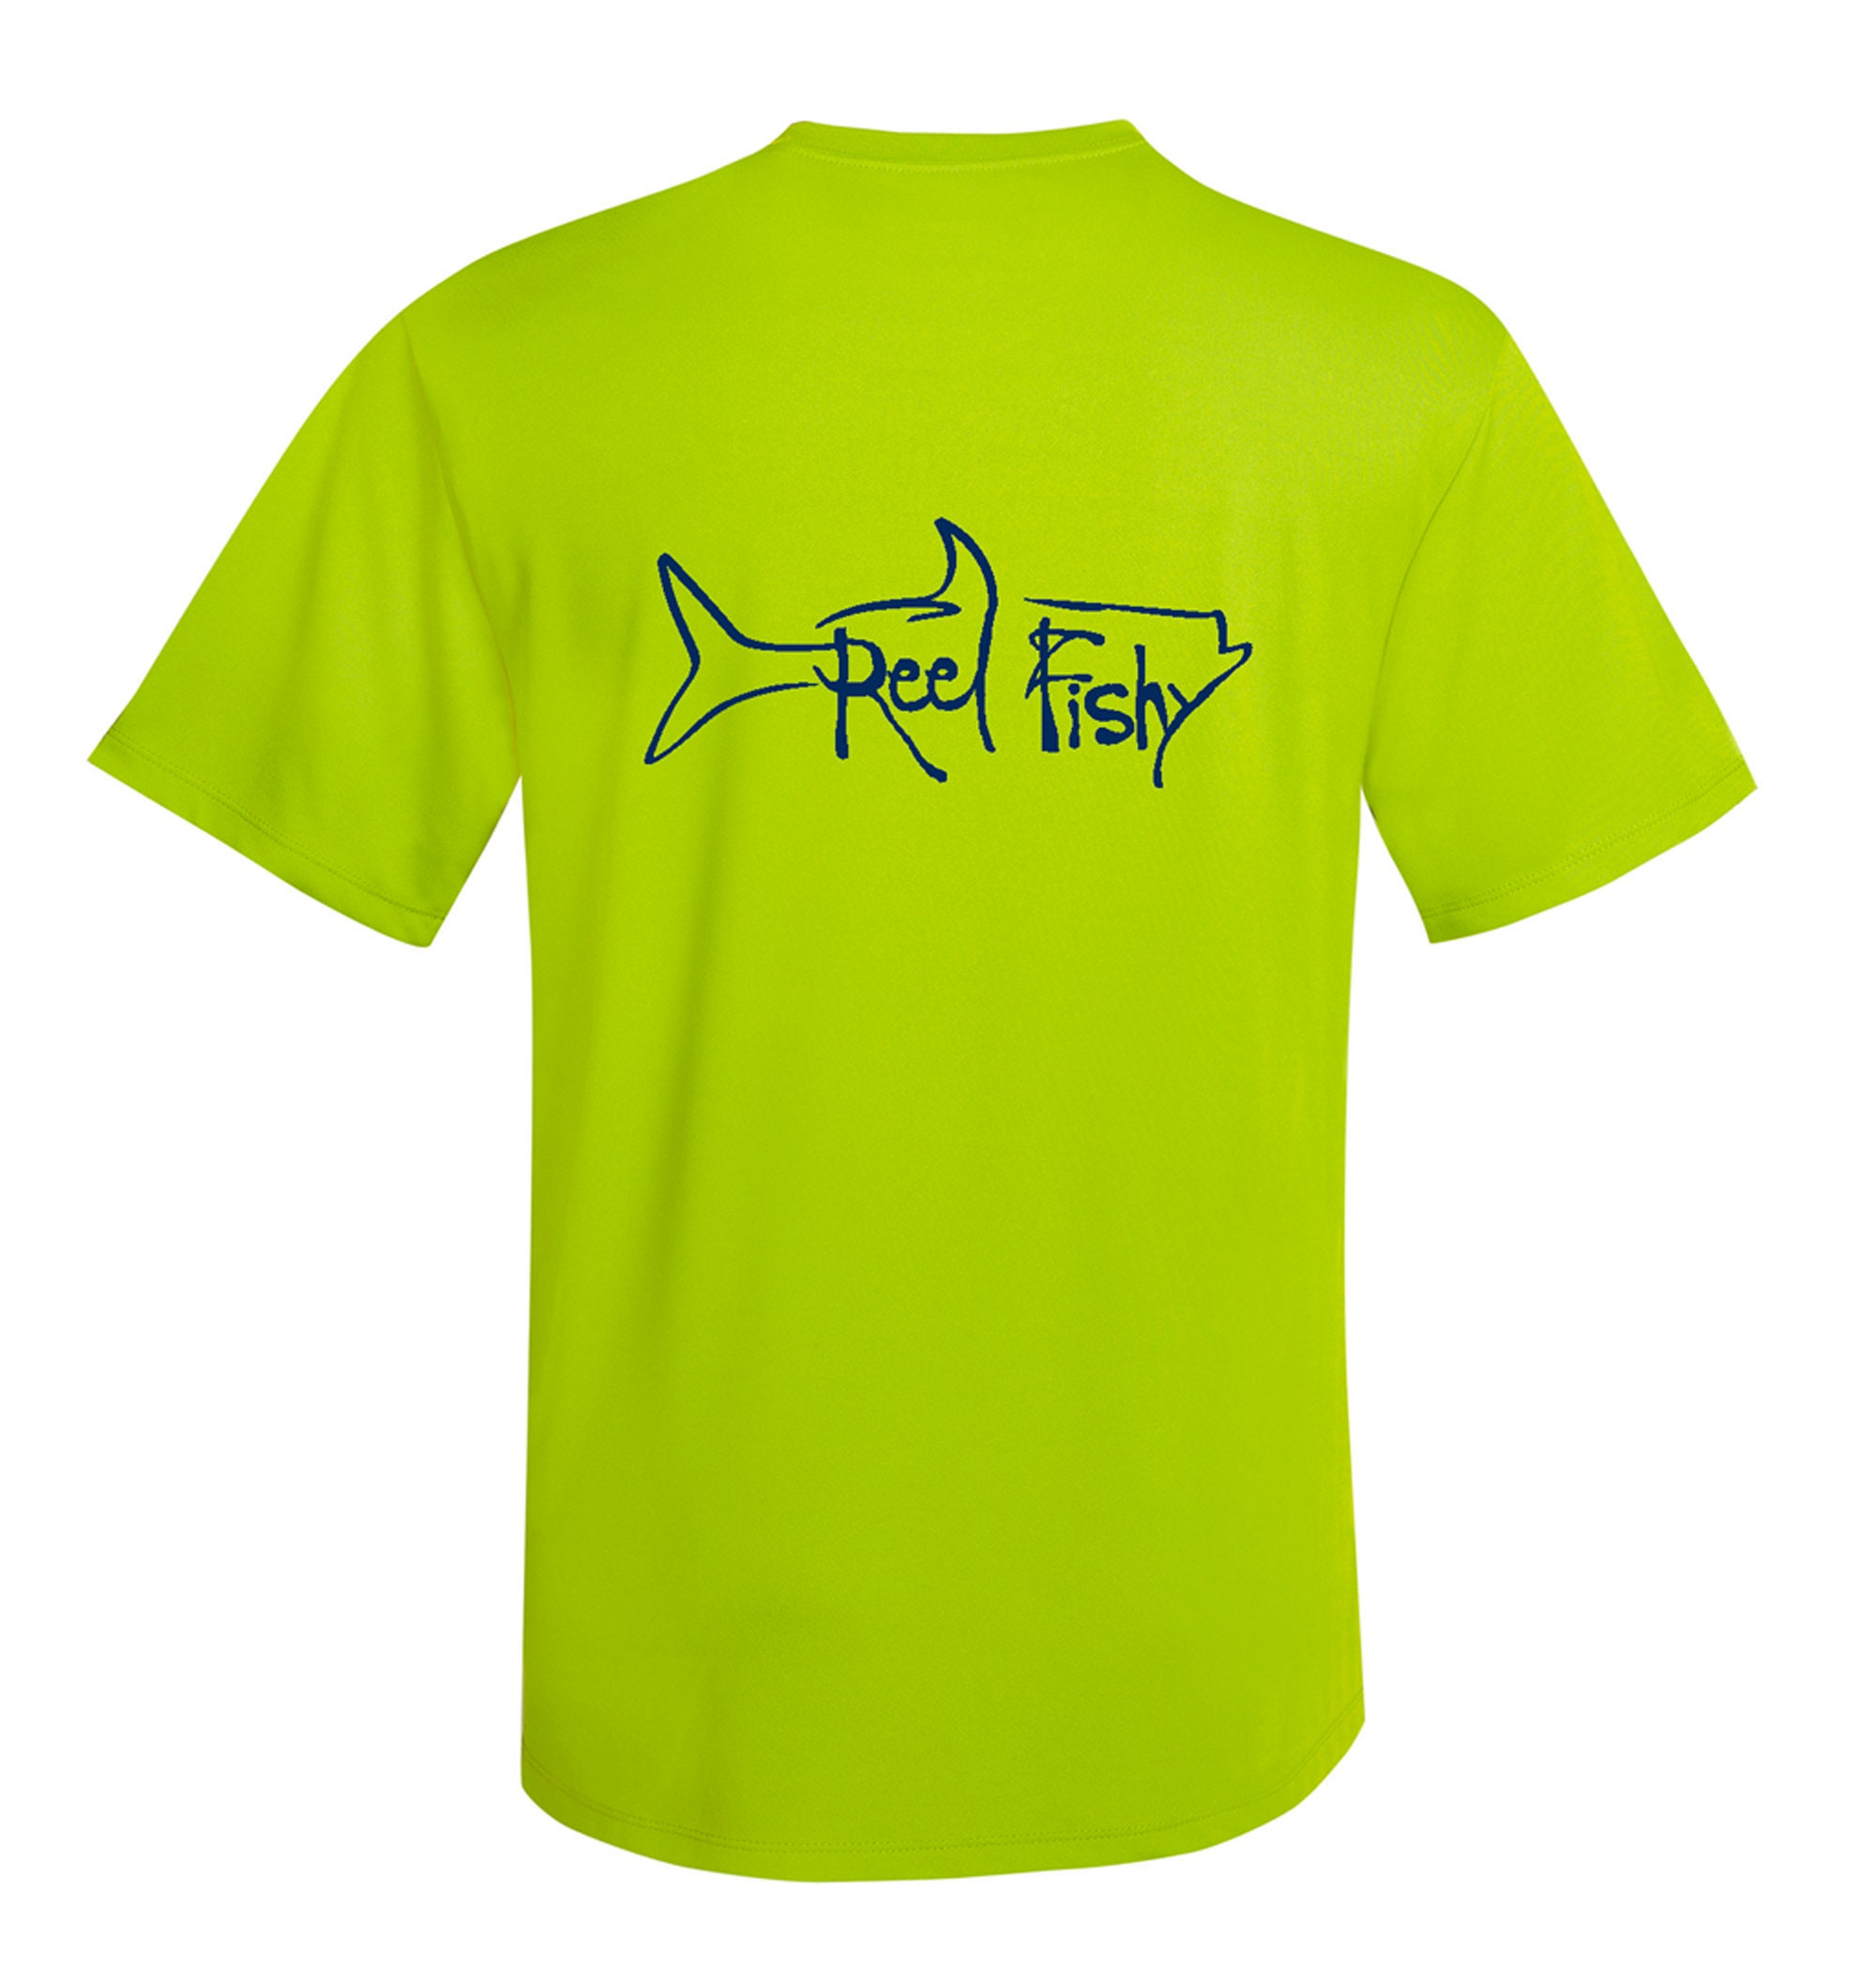 Buy Tarpon Fishing Short Sleeve Shirt, Tarpon Performance Shirt